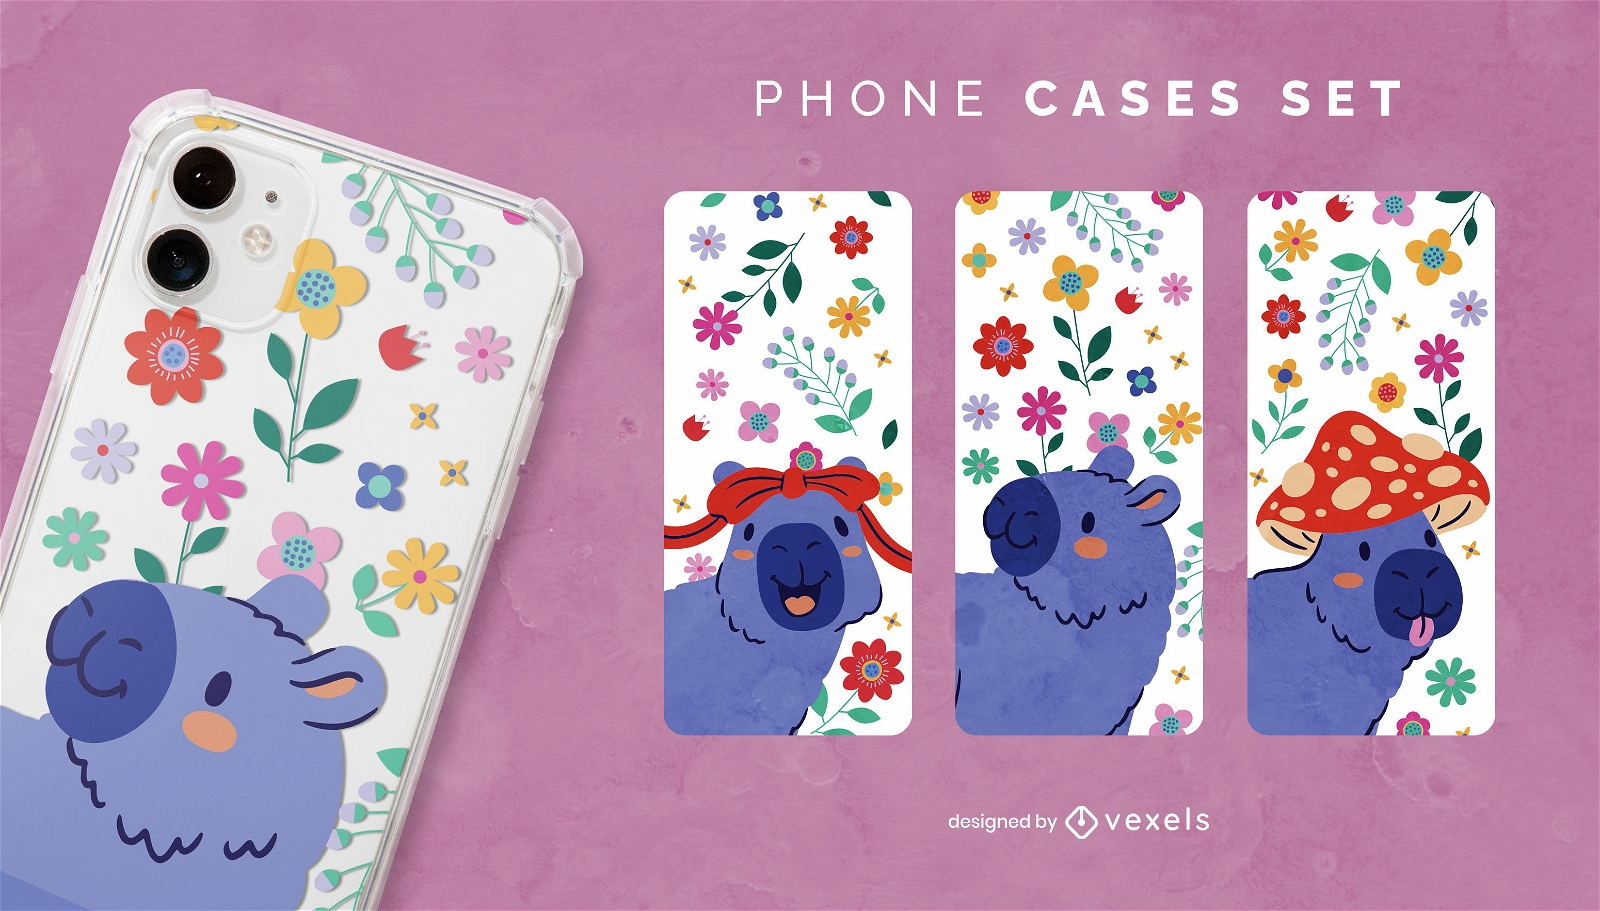 Capybara floral phone cases set design